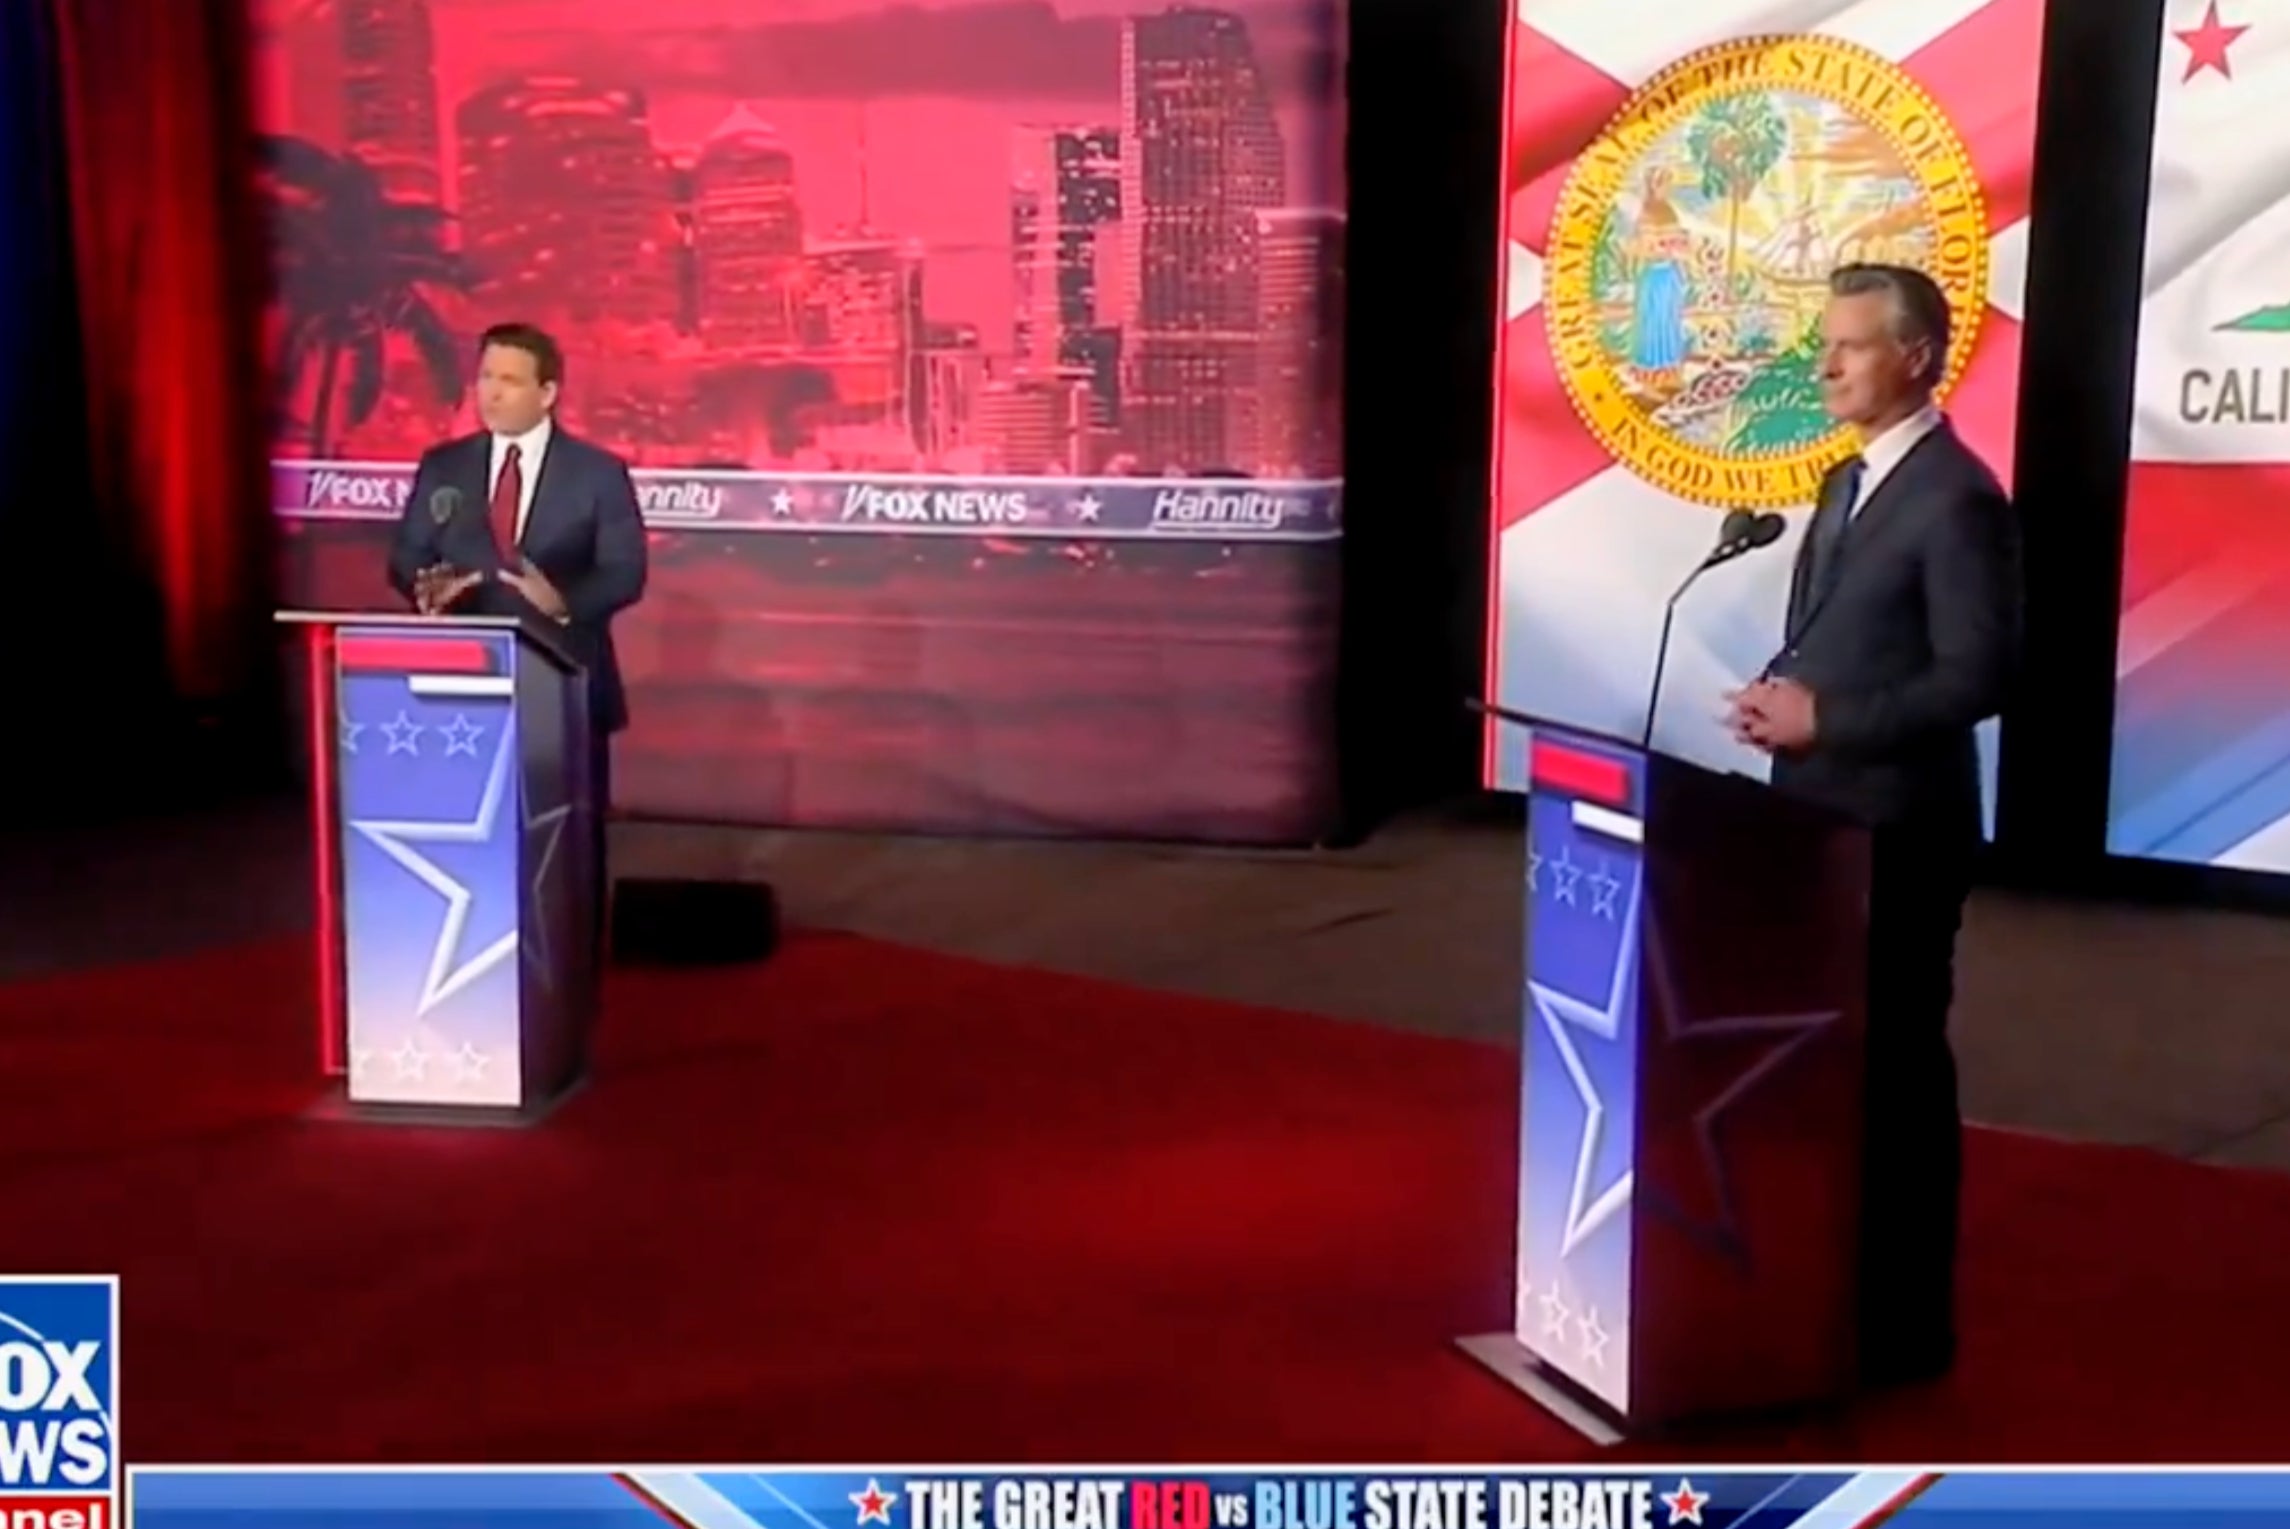 Ron DeSantis and Gavin Newsom clash in Fox News debate